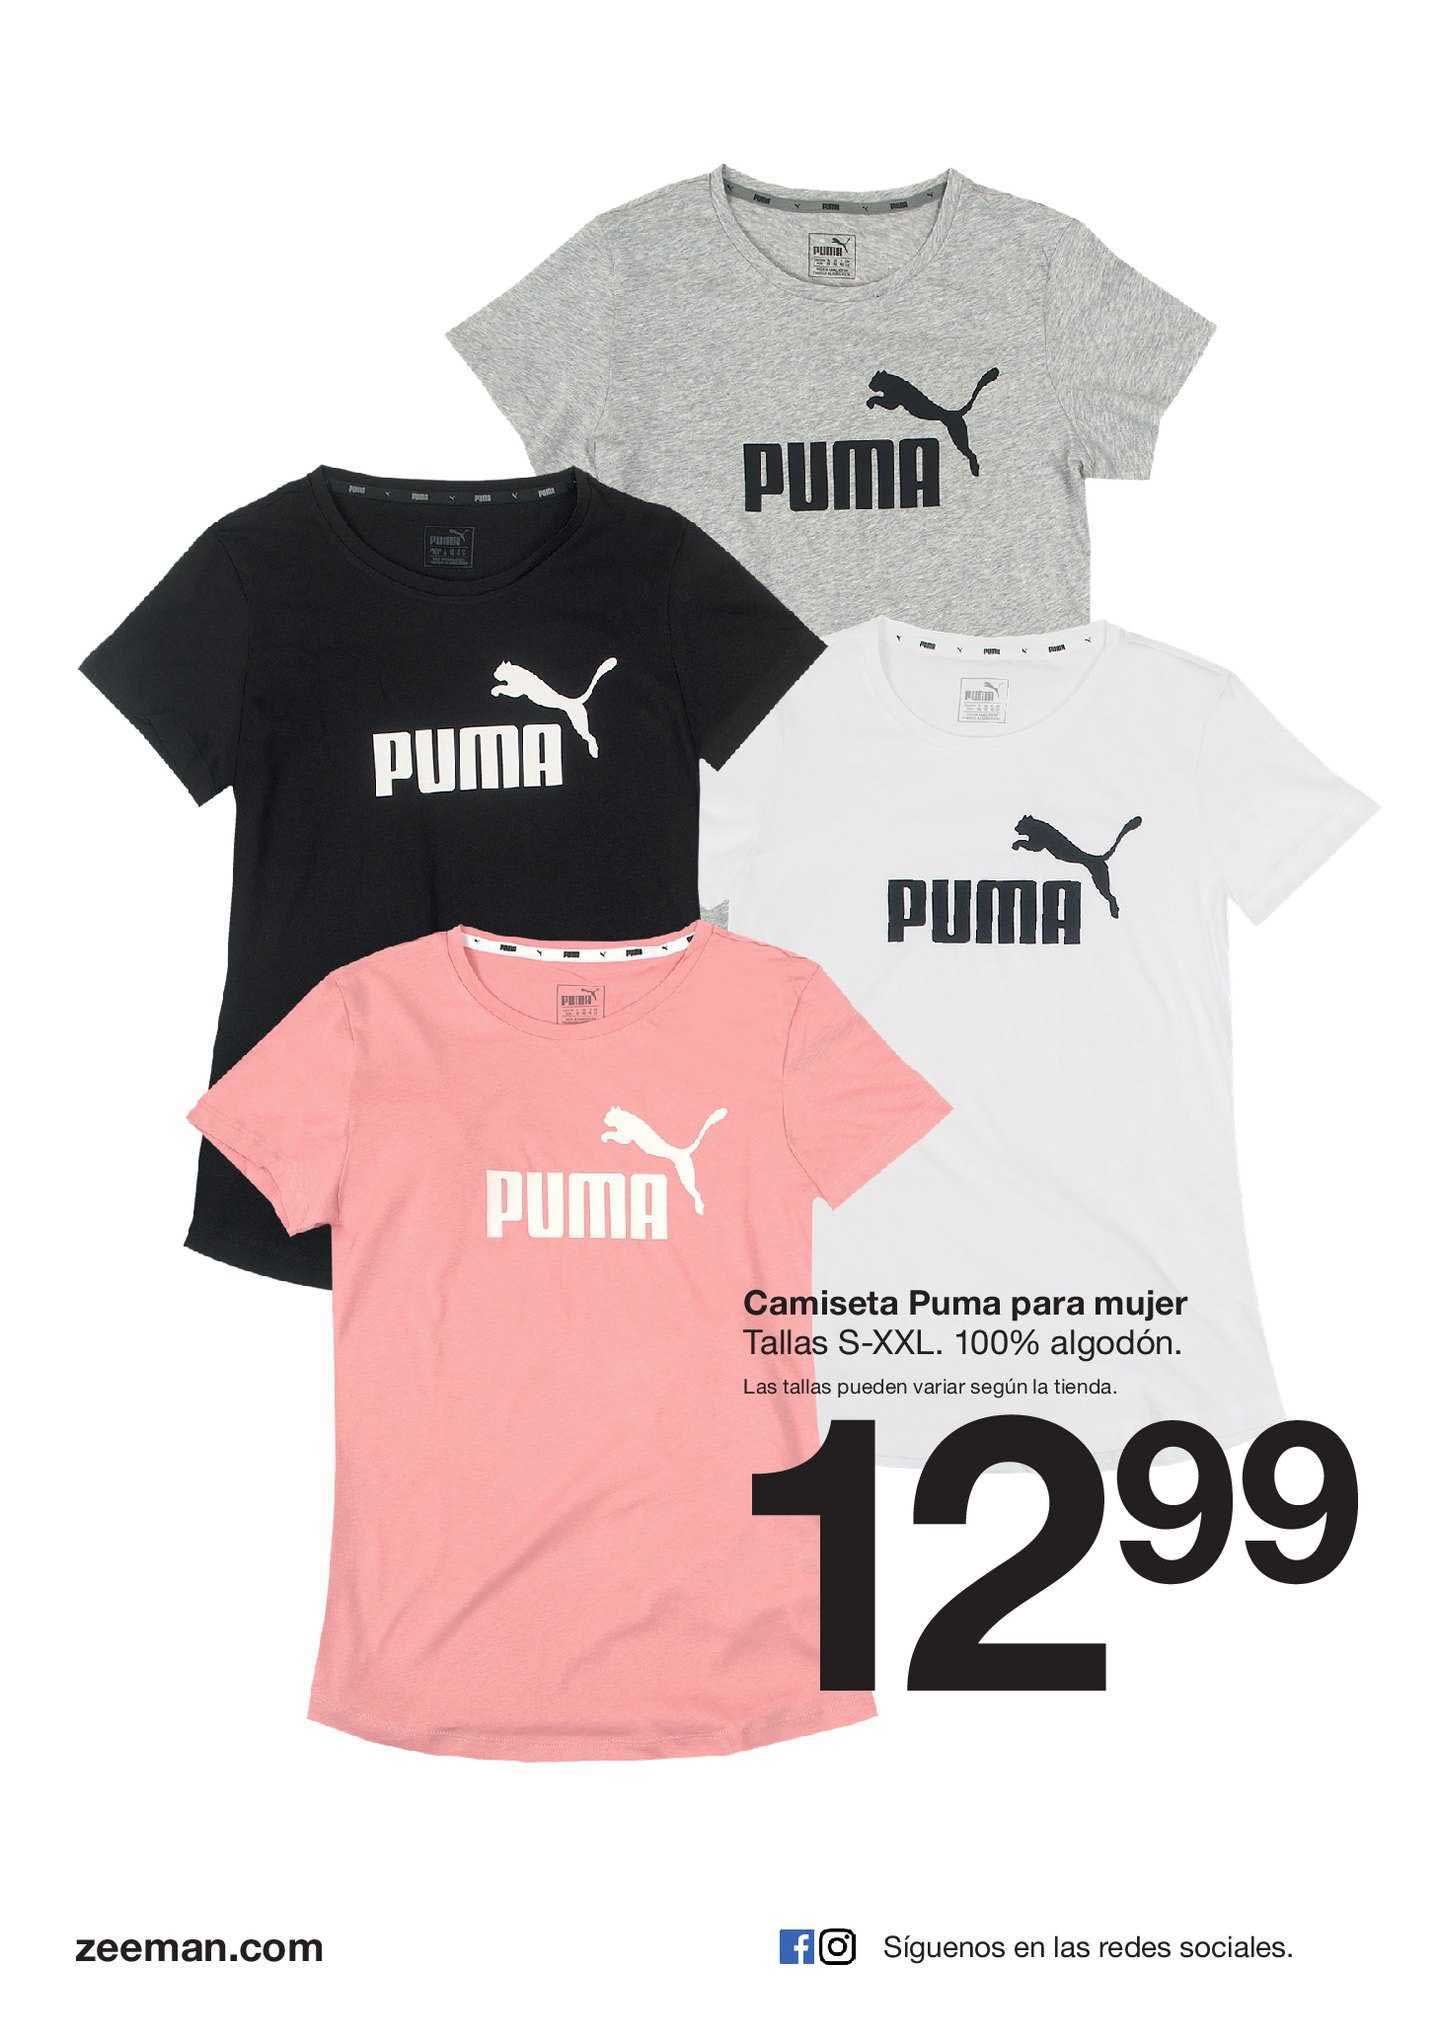 Zeeman Camiseta Puma Para Mujer